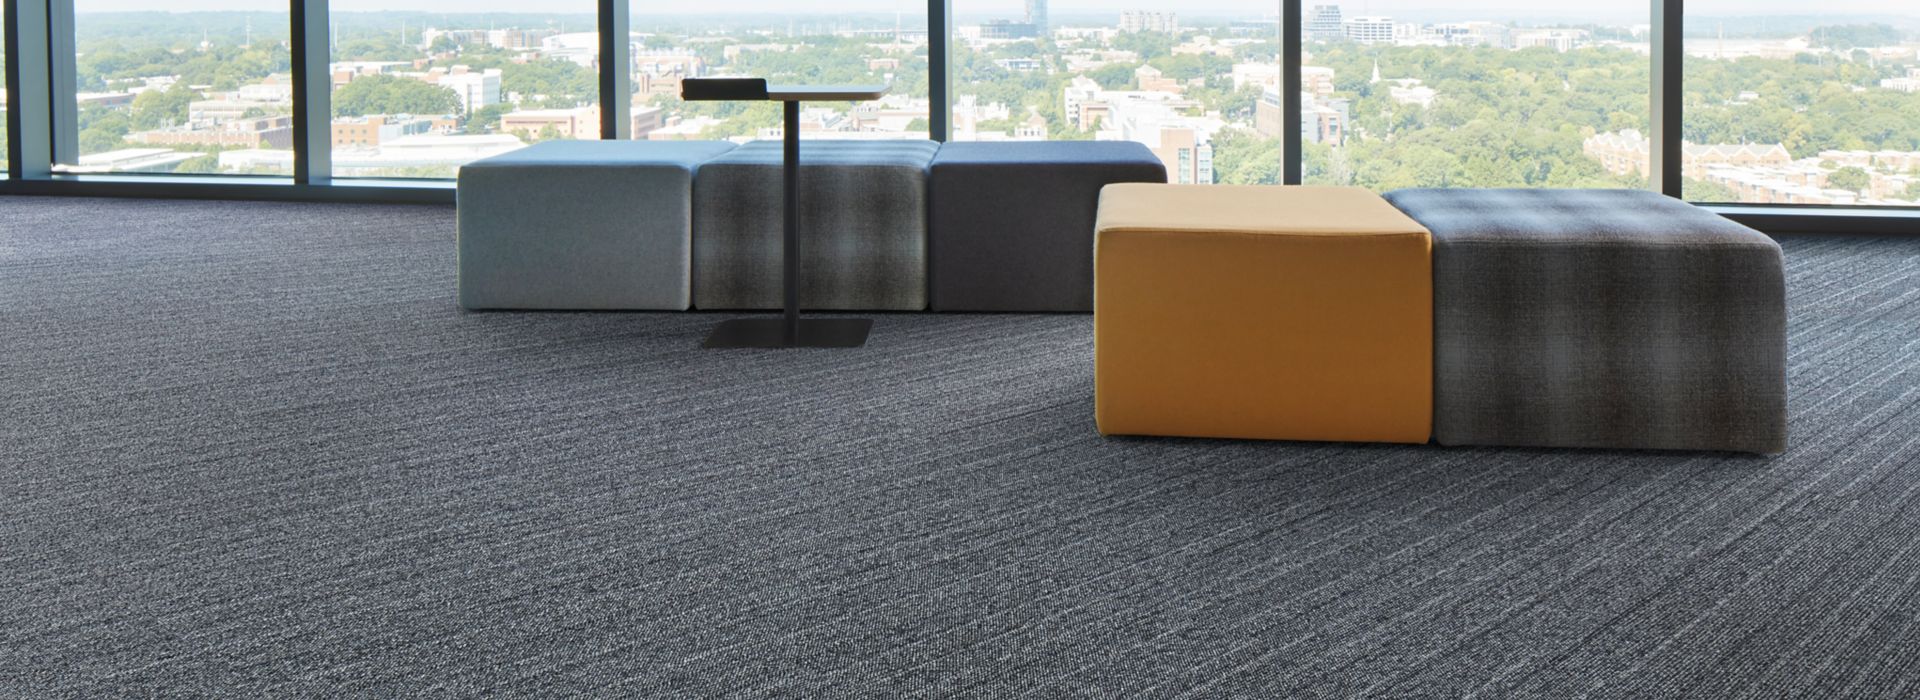 Interface WW860 carpet tile in modern open air lobby